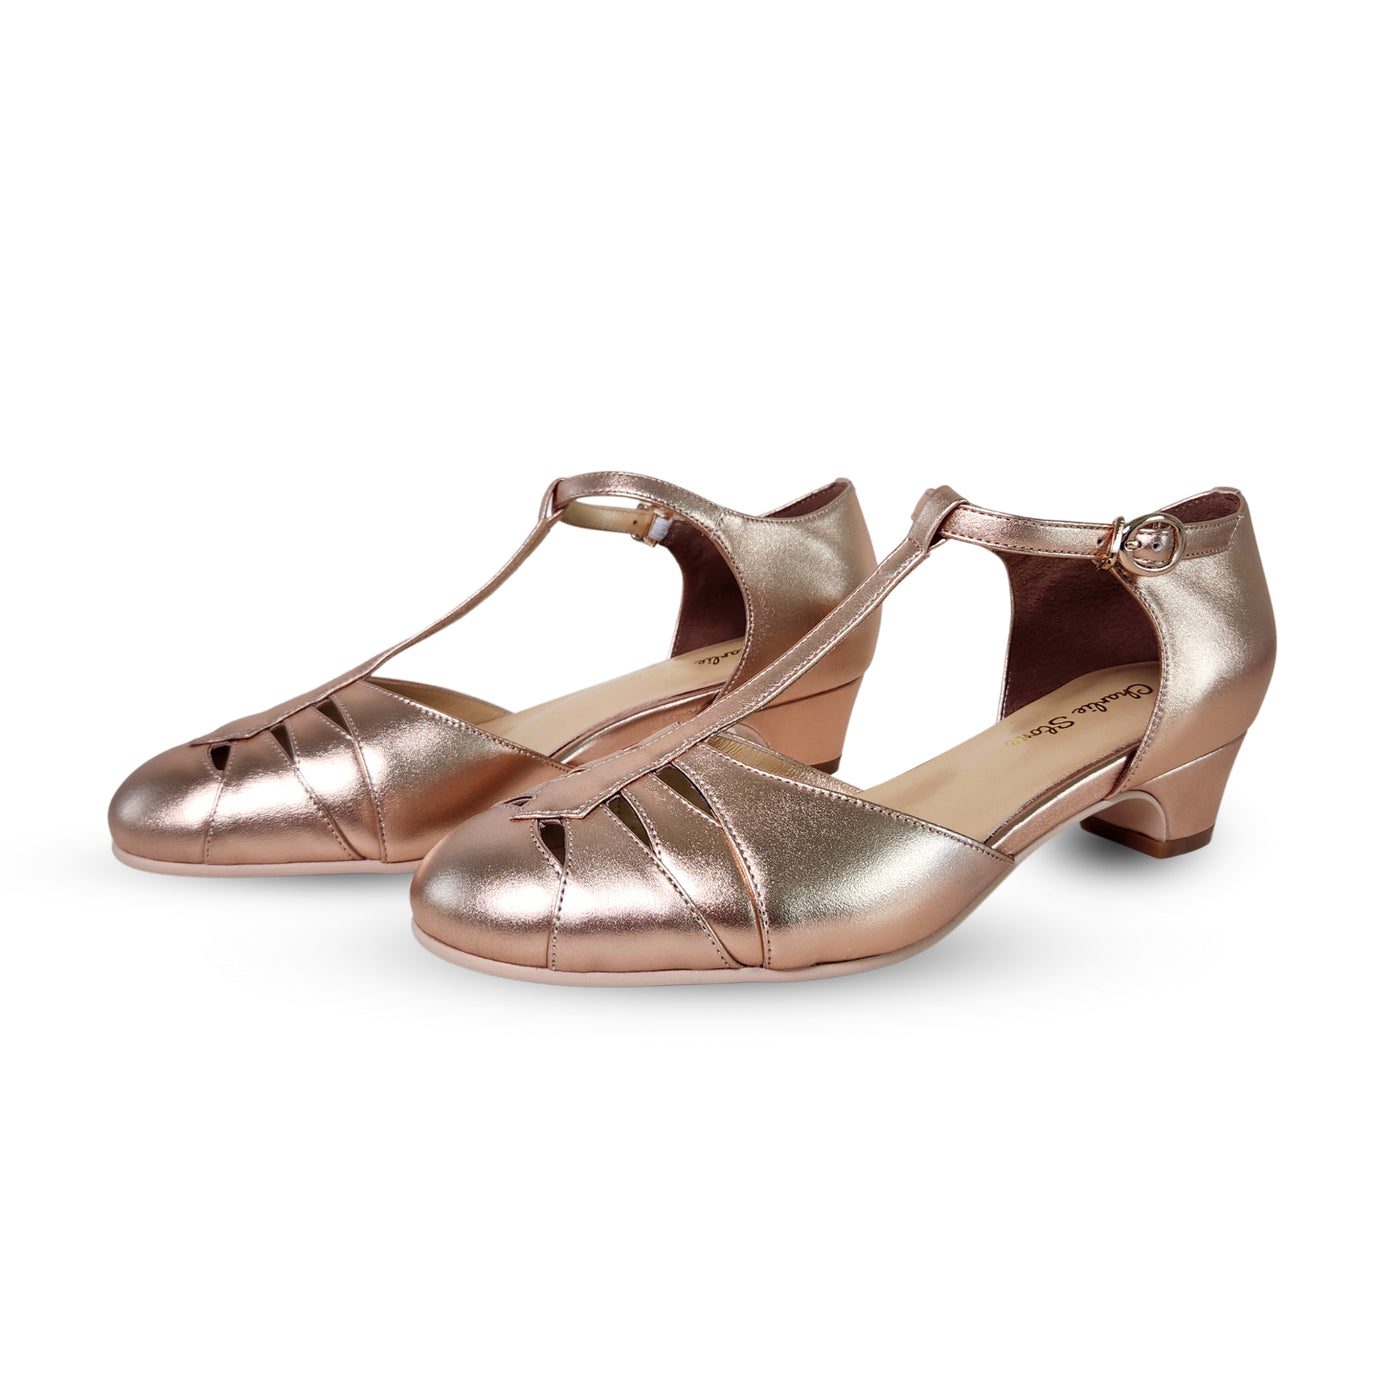 Womens mid heel glitter slingback shoe - Buy Low heel court shoes